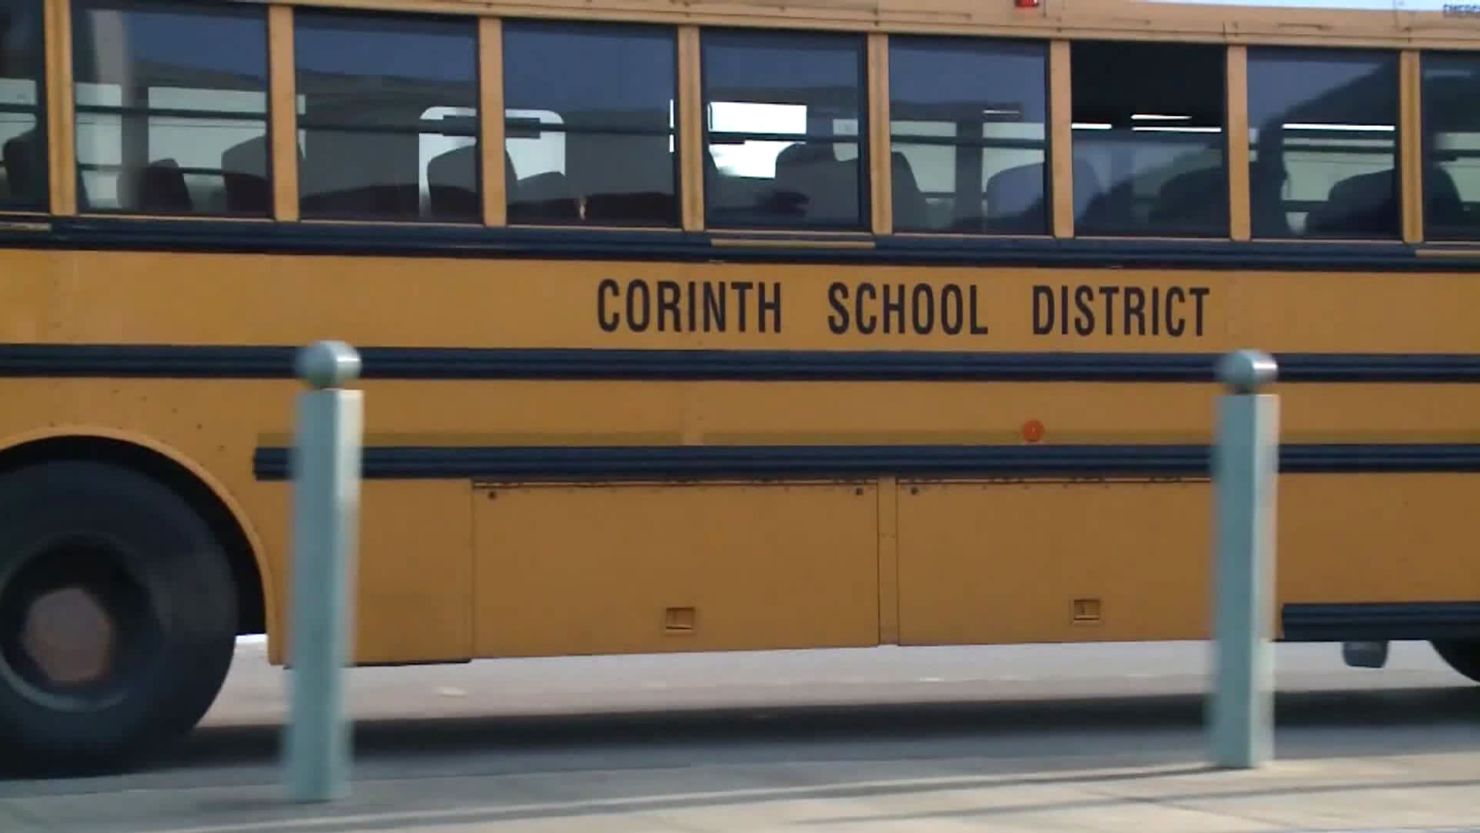 corinth school district bus